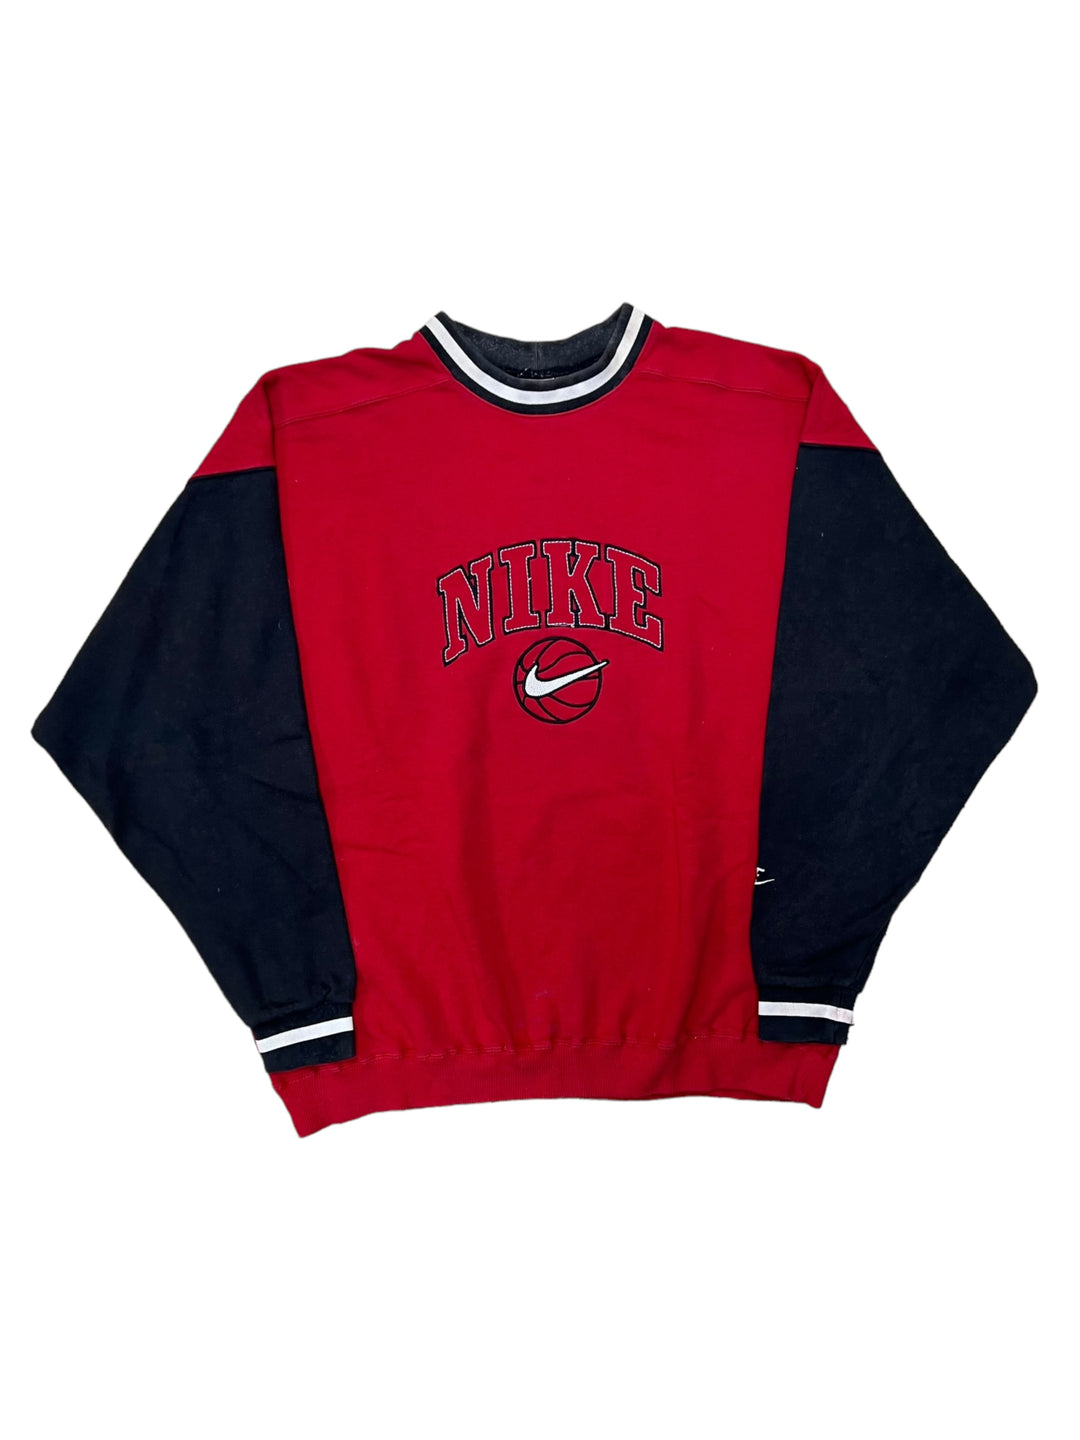 Nike vintage 90’s Sweatshirt Men’s Extra large